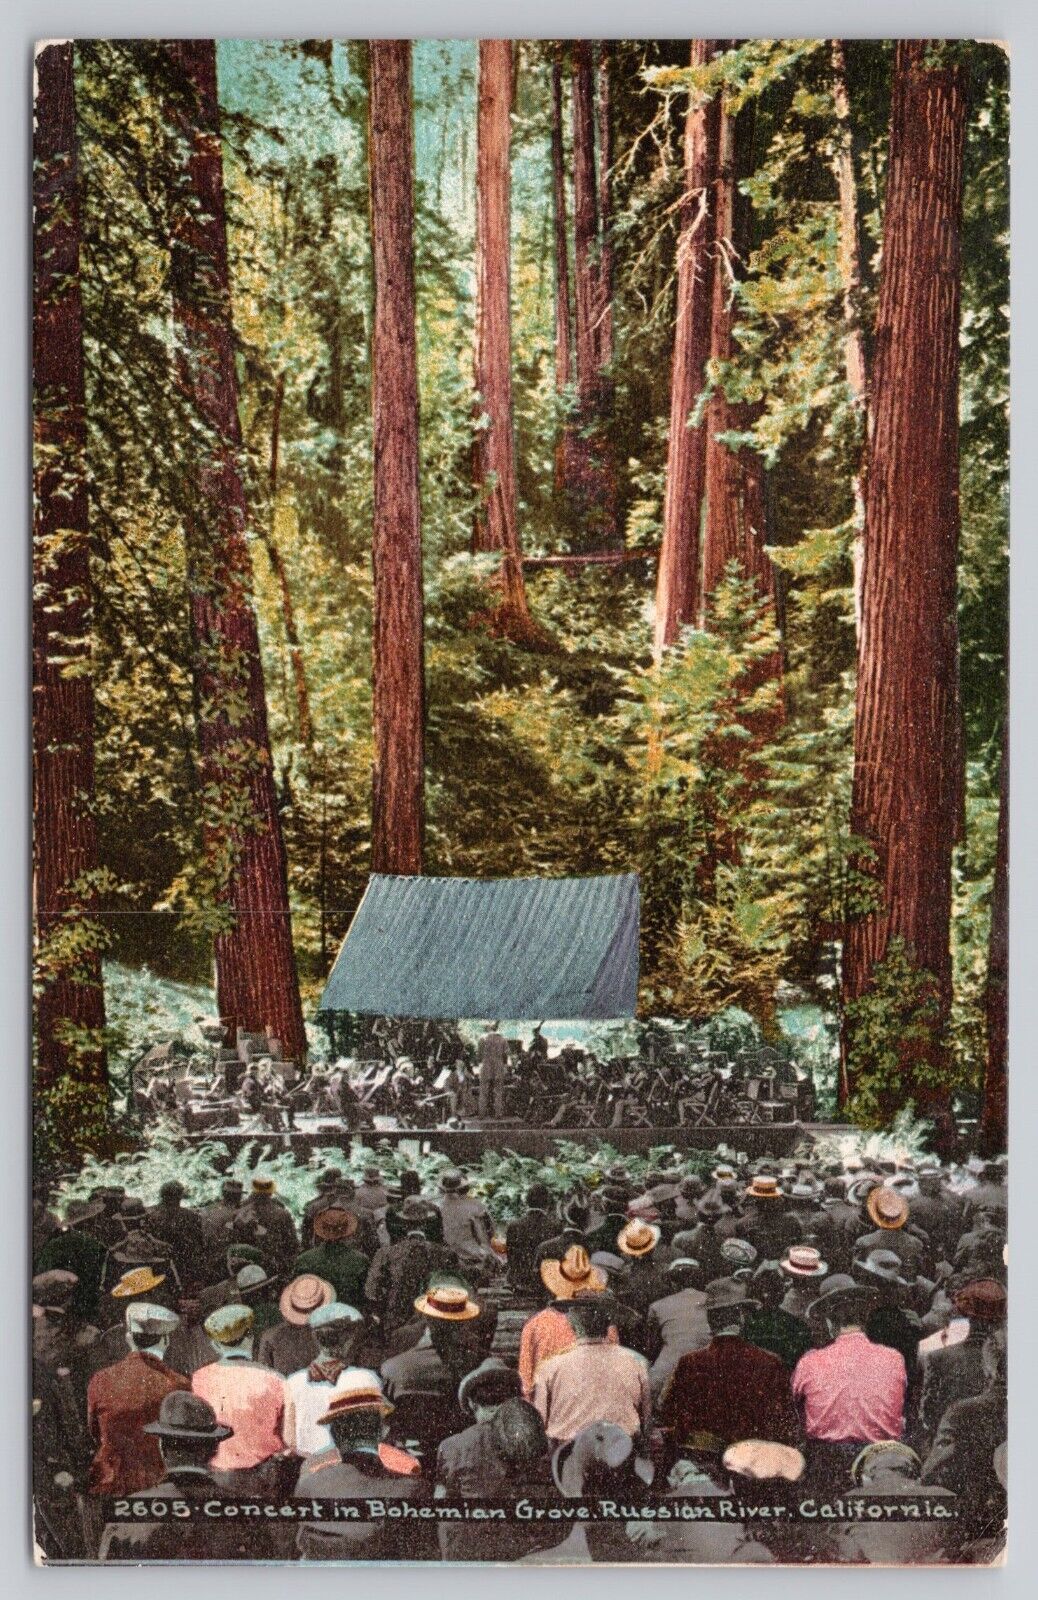 Monte Rio California, Bohemian Grove Concert, Russian River, Vintage Postcard